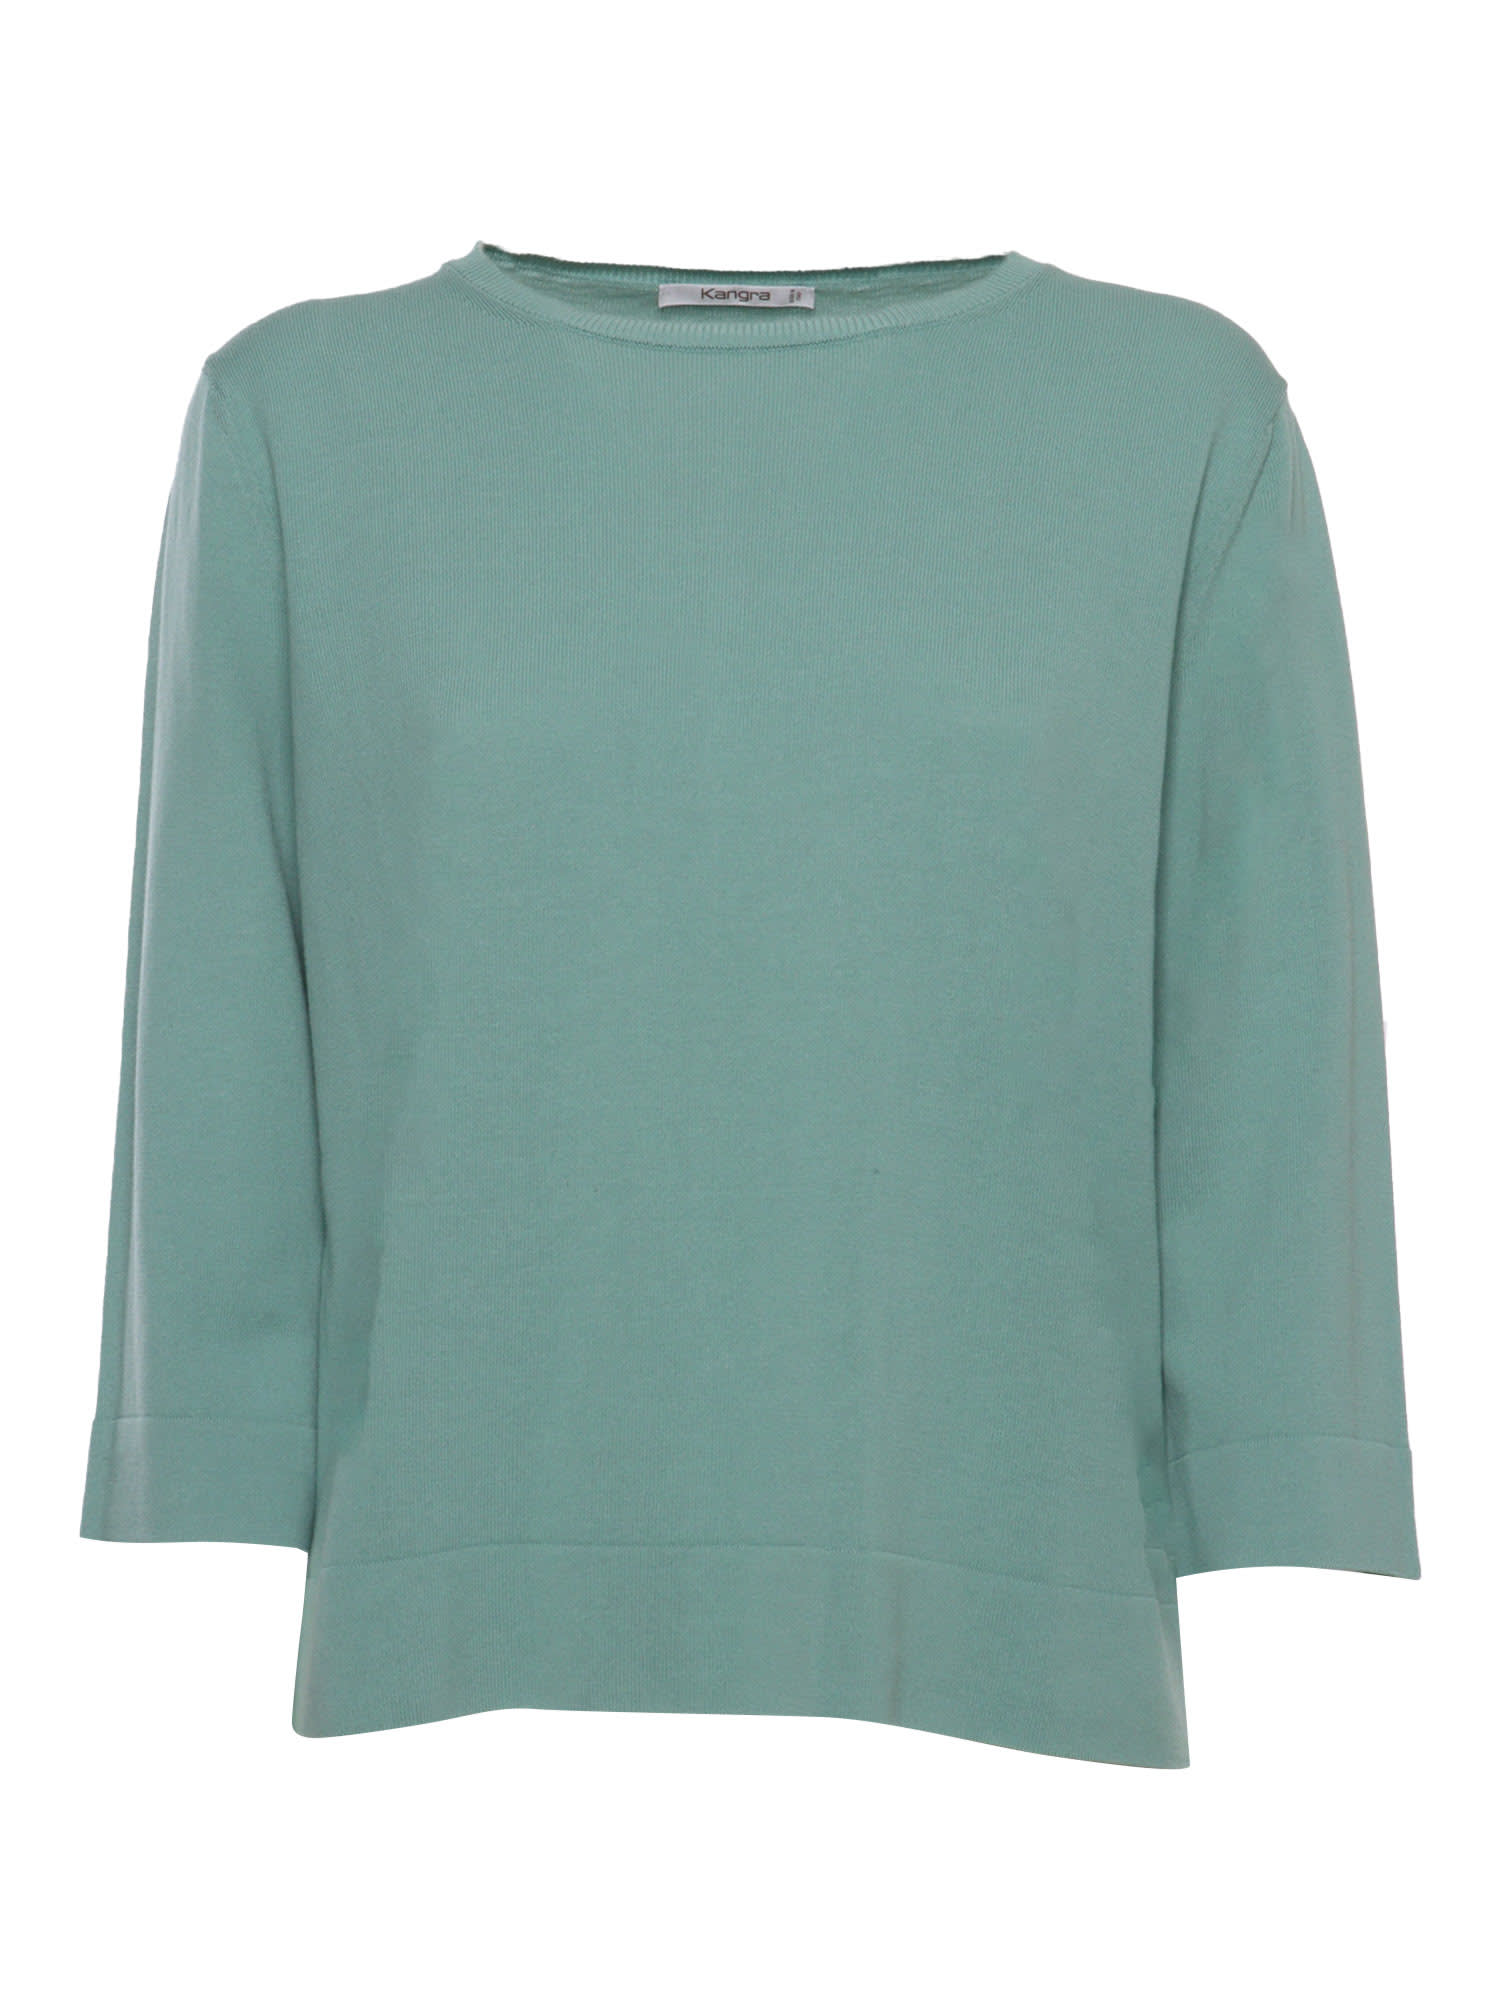 Aqua Green Cotton Sweater